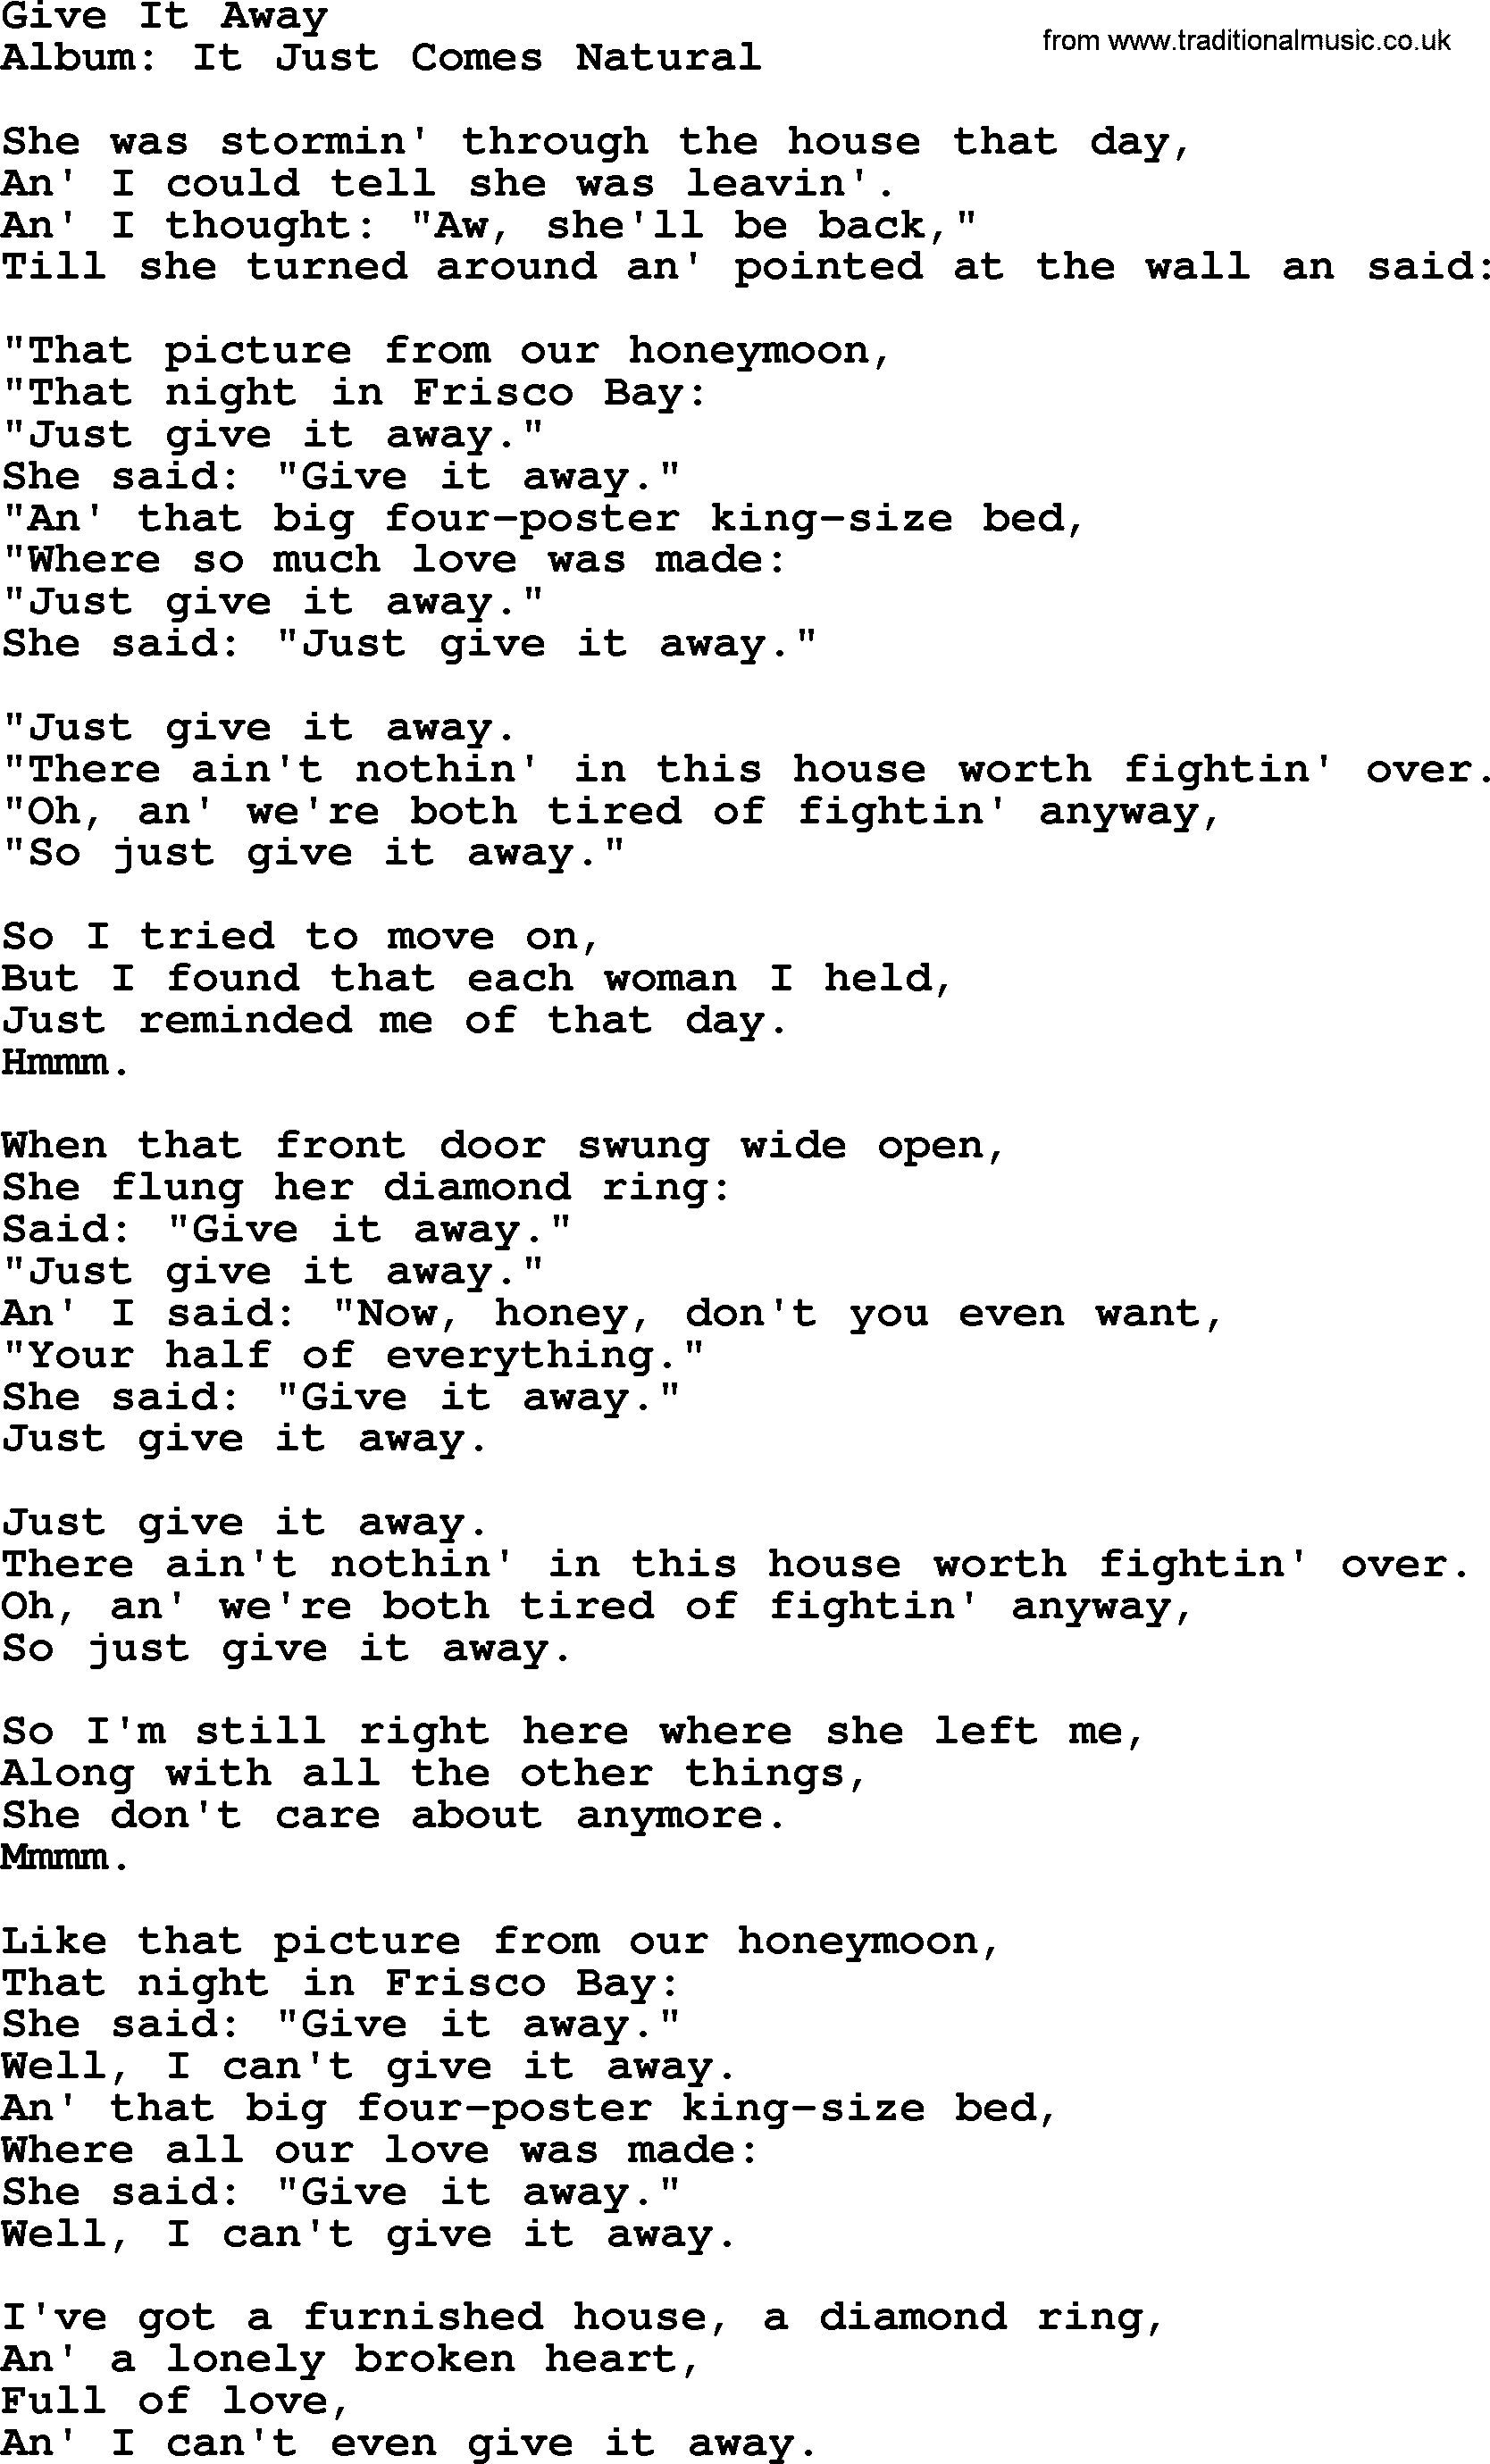 George Strait song: Give It Away, lyrics